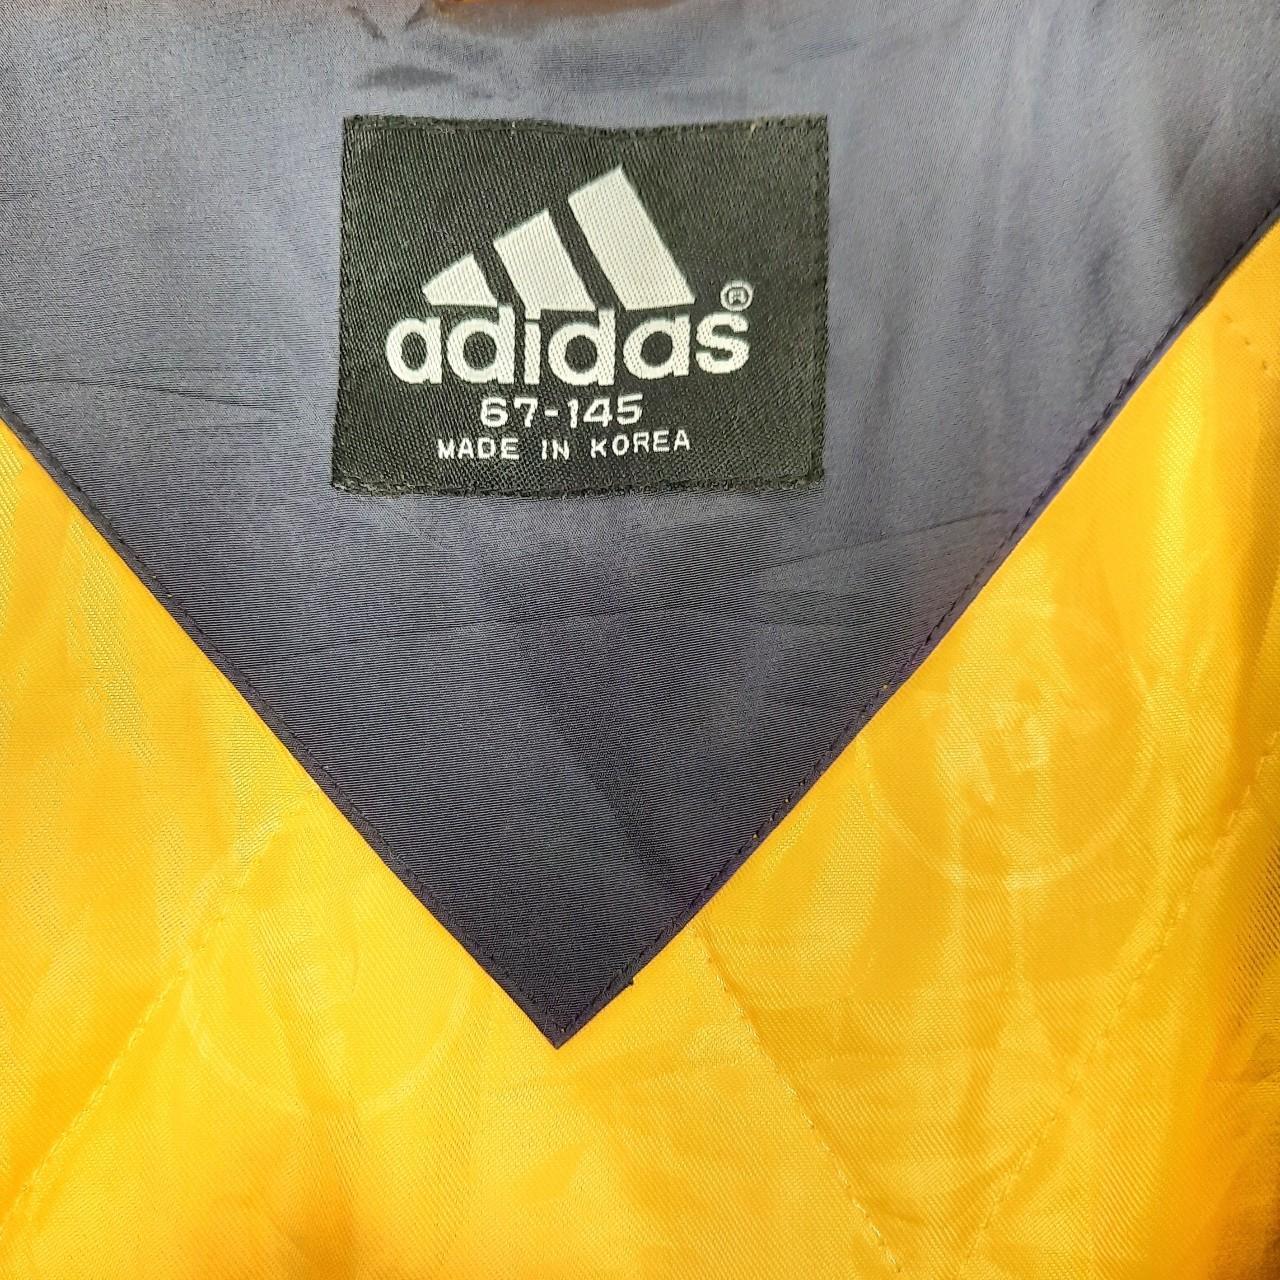 Adidas Made in Korea